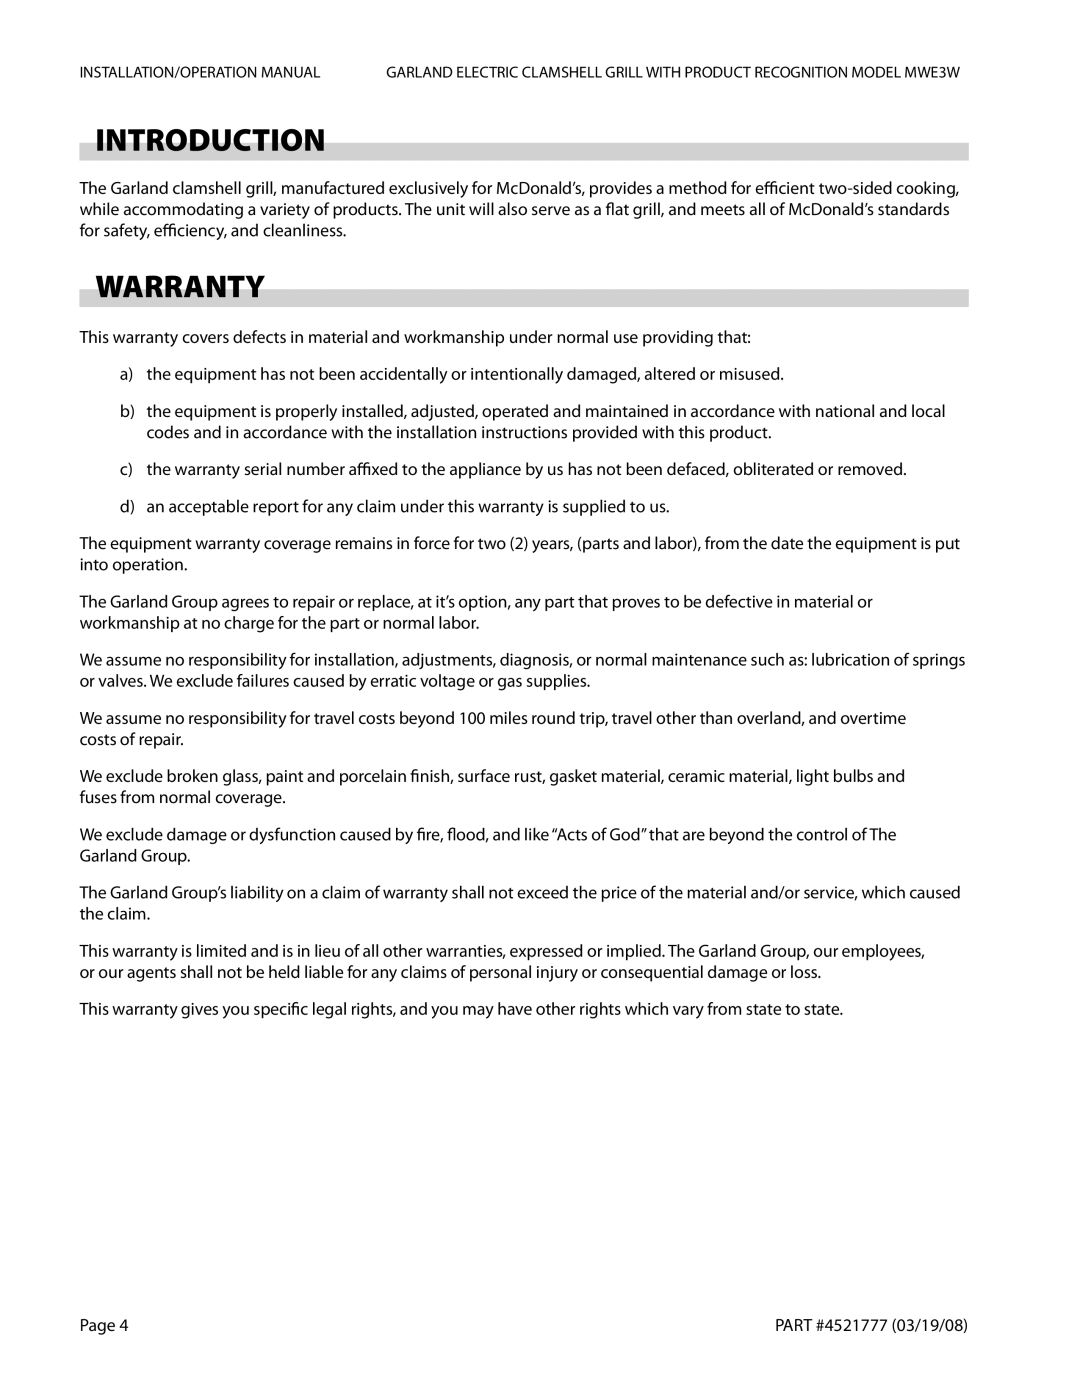 Garland MWE3W operation manual Introduction, Warranty 